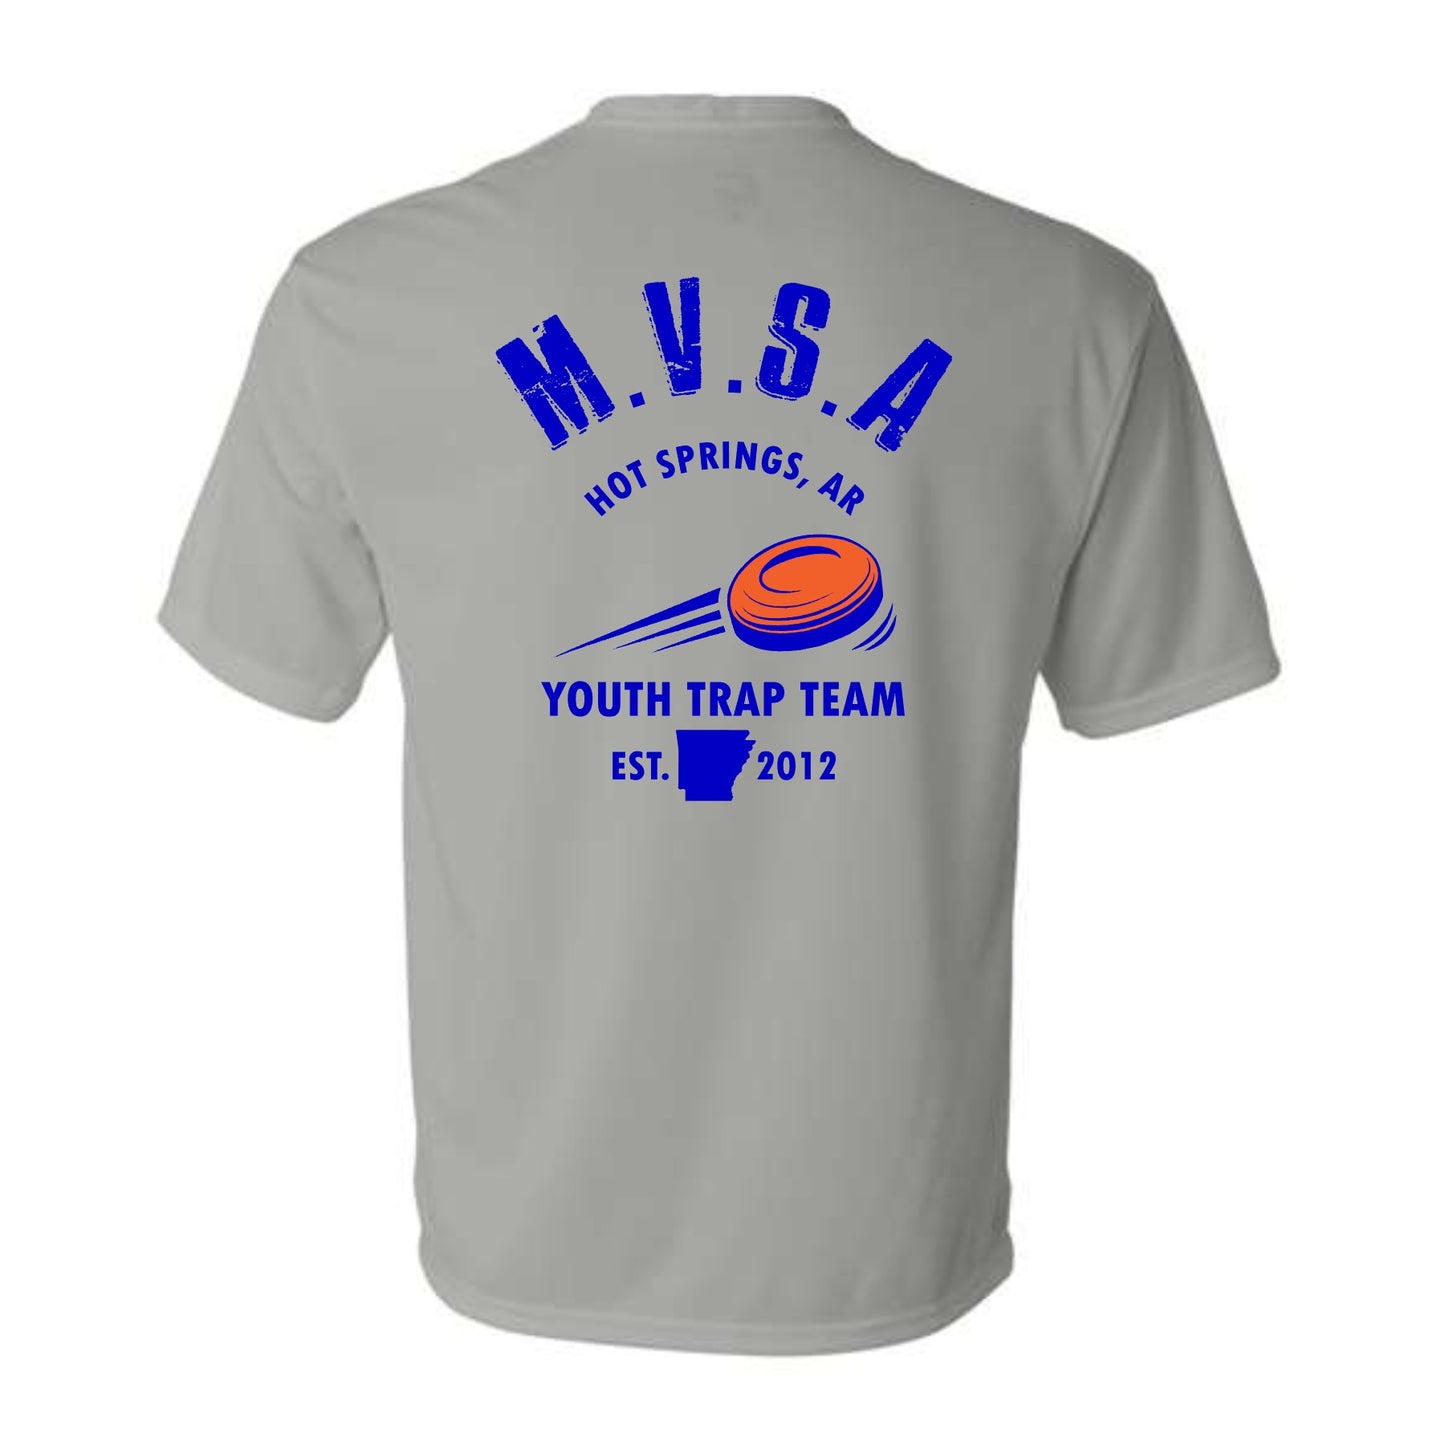 MVSA Youth Trap Team - Short Sleeve Grey